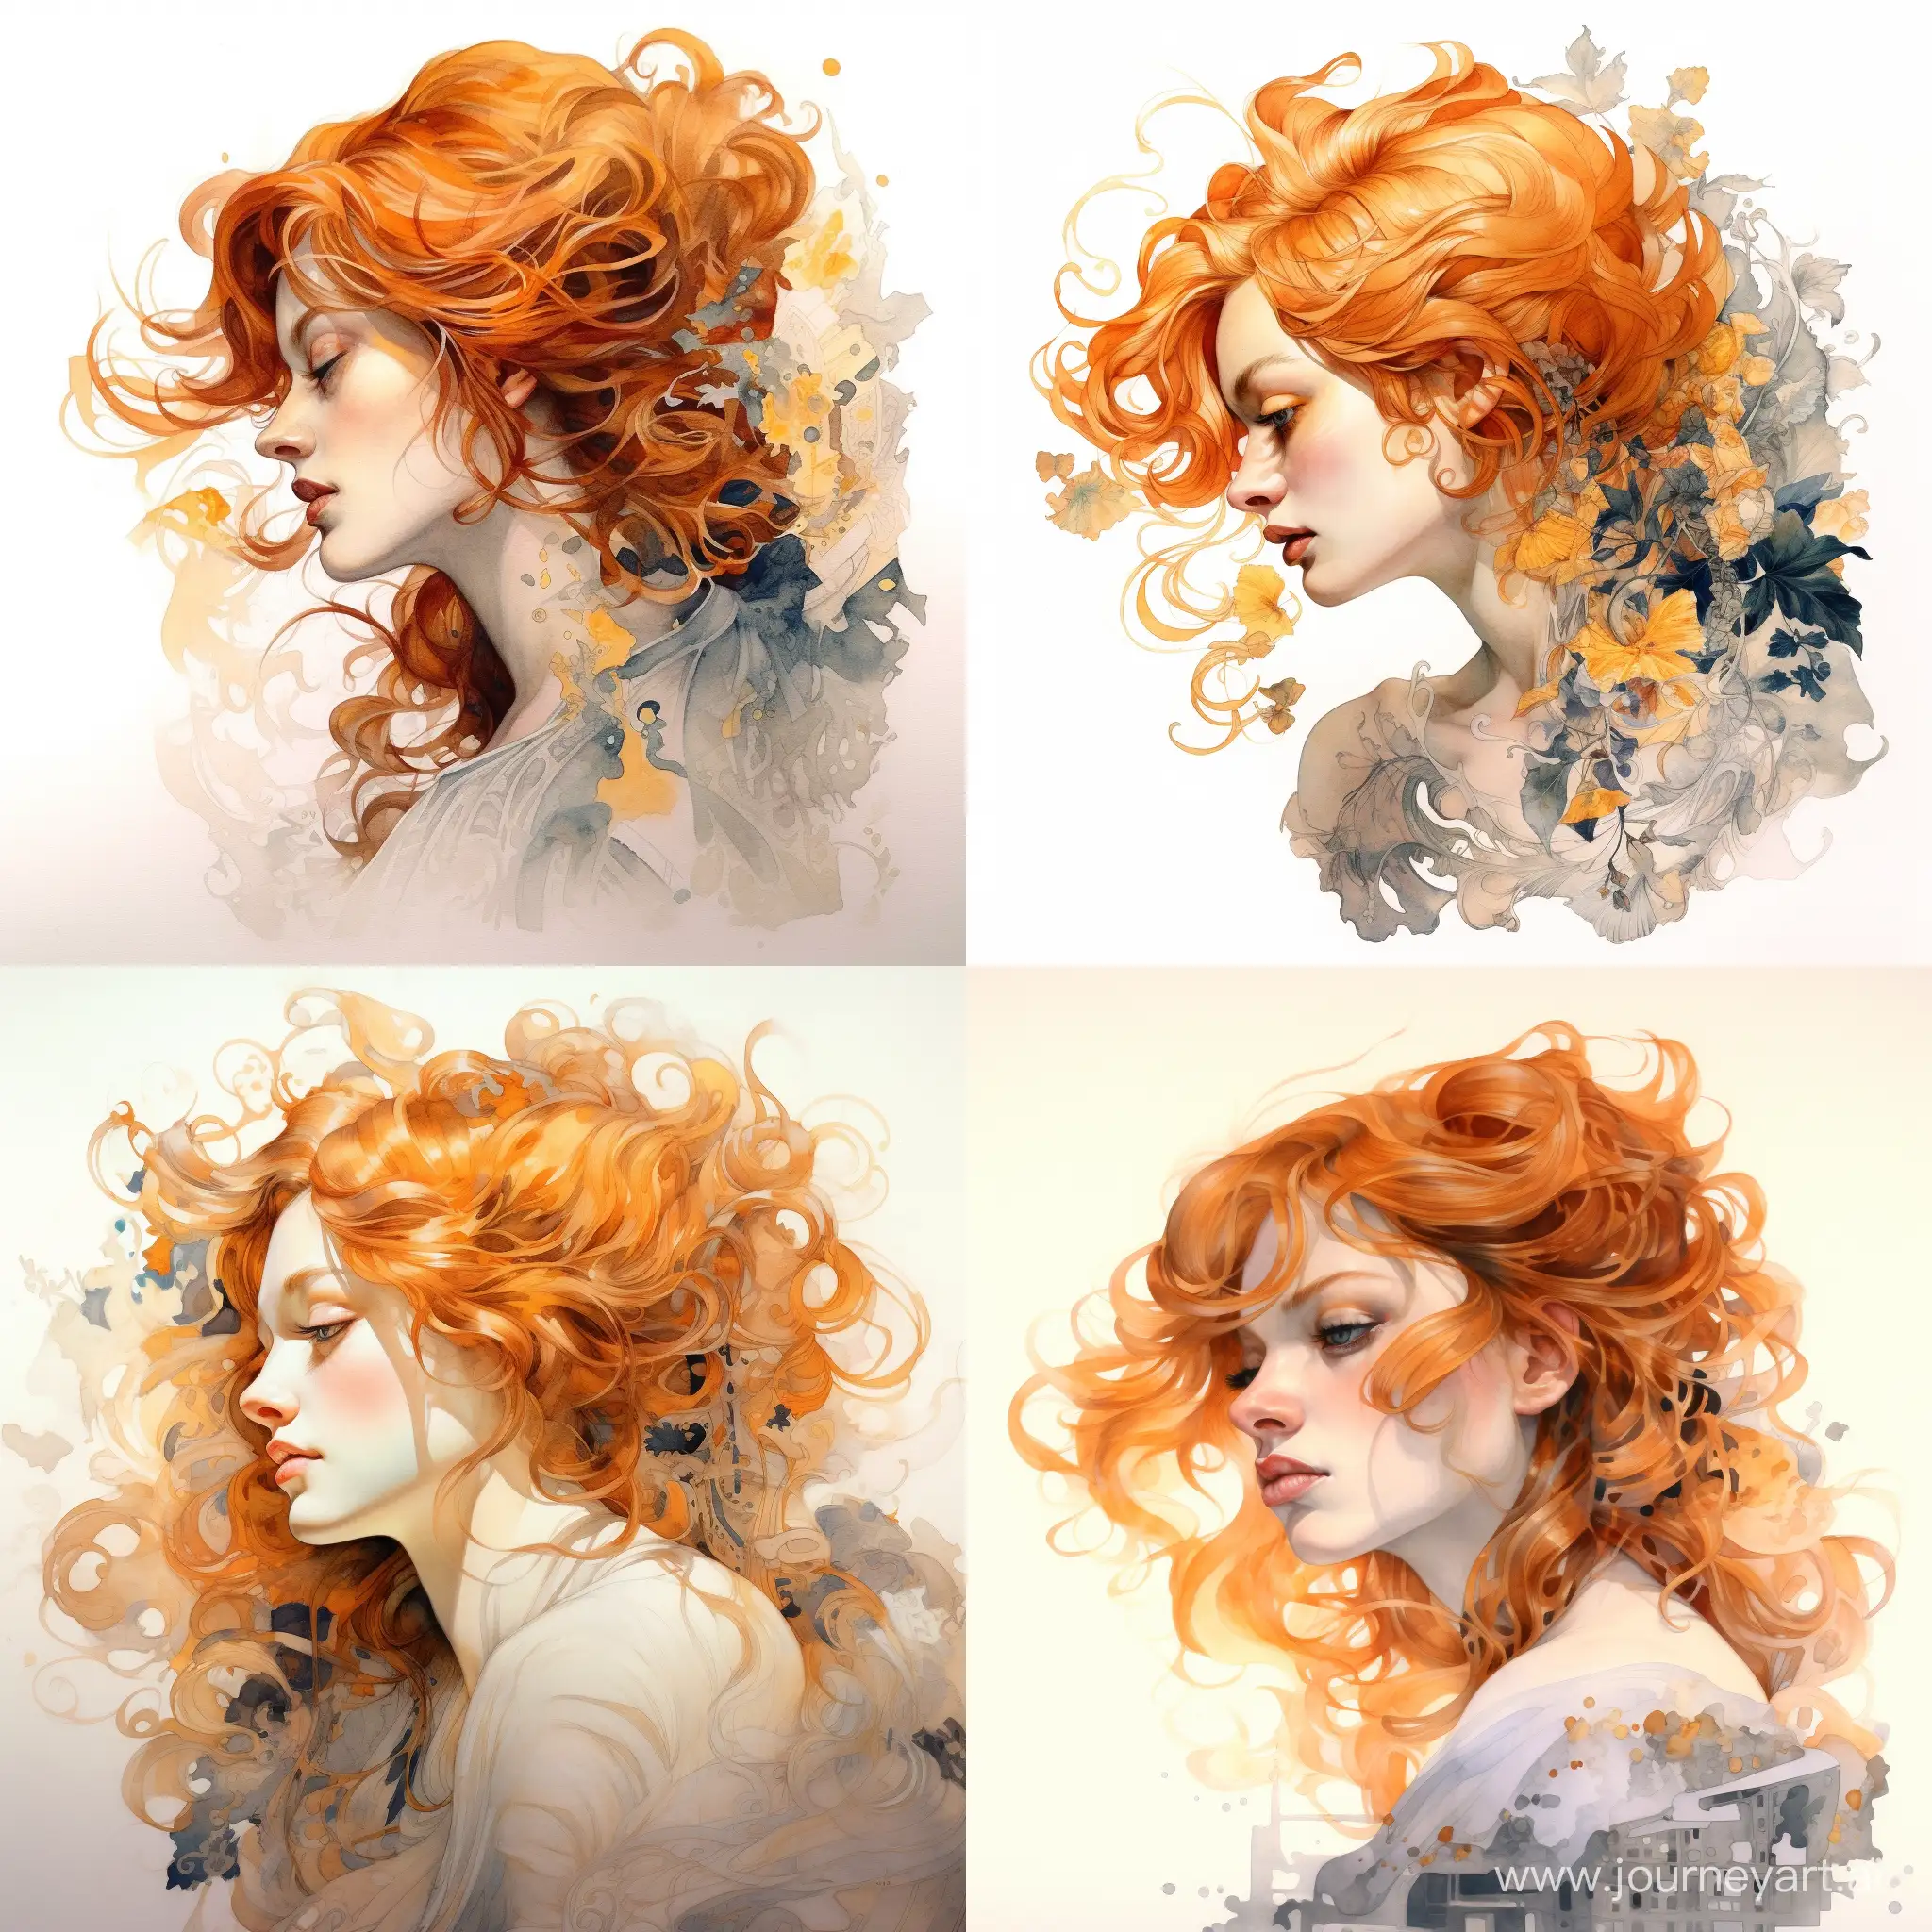 Elegant-Double-Exposure-Portrait-with-Intricate-Orange-Hair